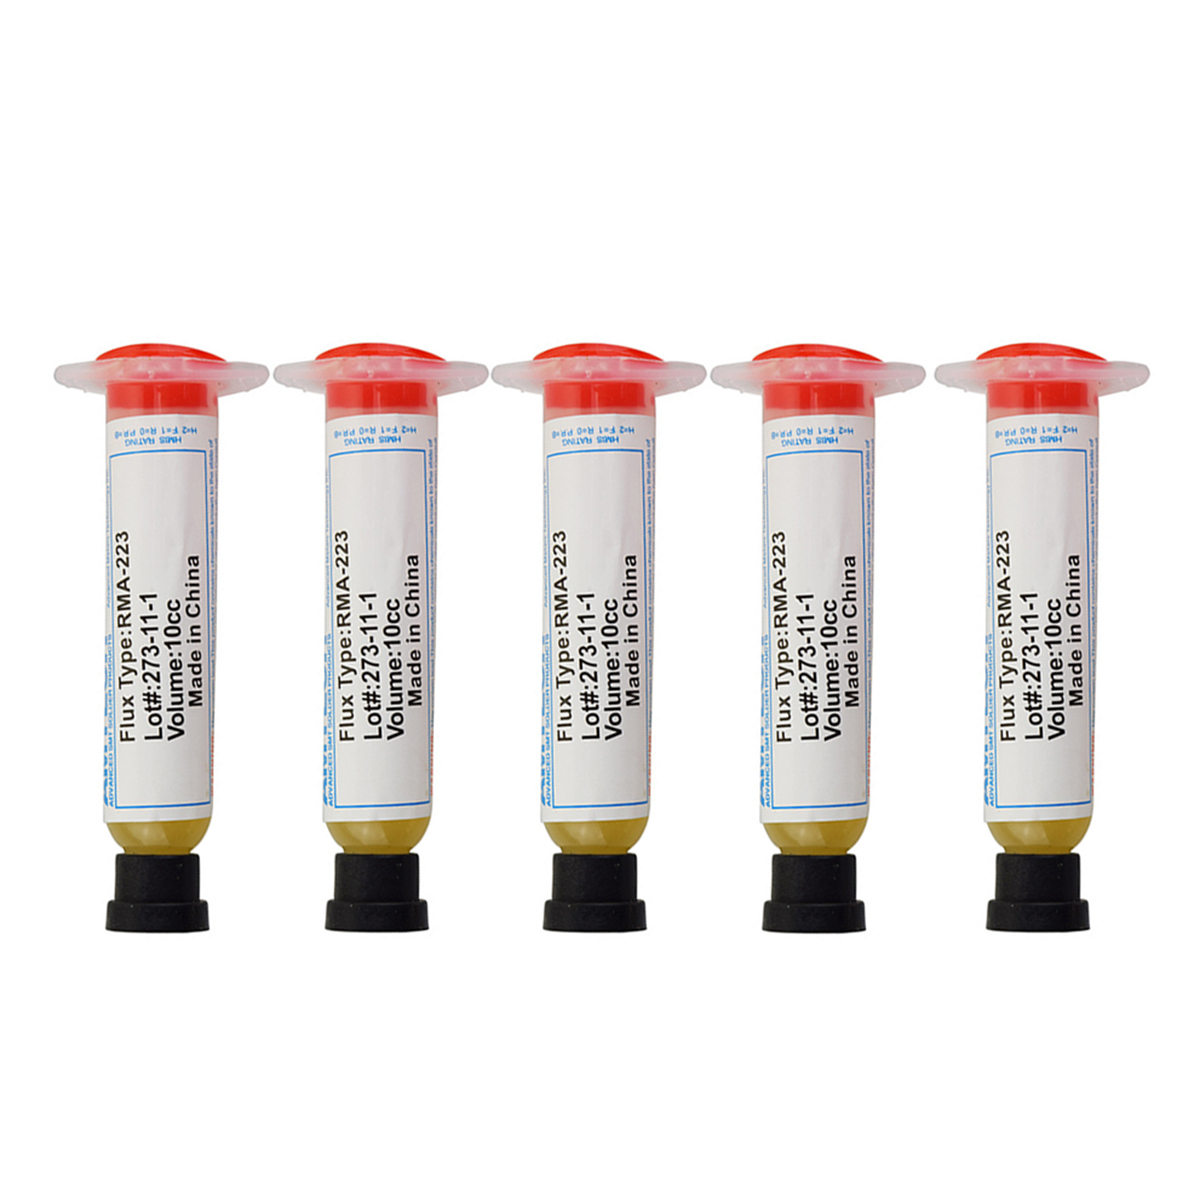 5pcs High Quality New 10cc RMA-223 PCB PGA BGA SMD Syringe Solder Paste Flux Grease Repair Soldering Paste Mayitr 95*35*23mm